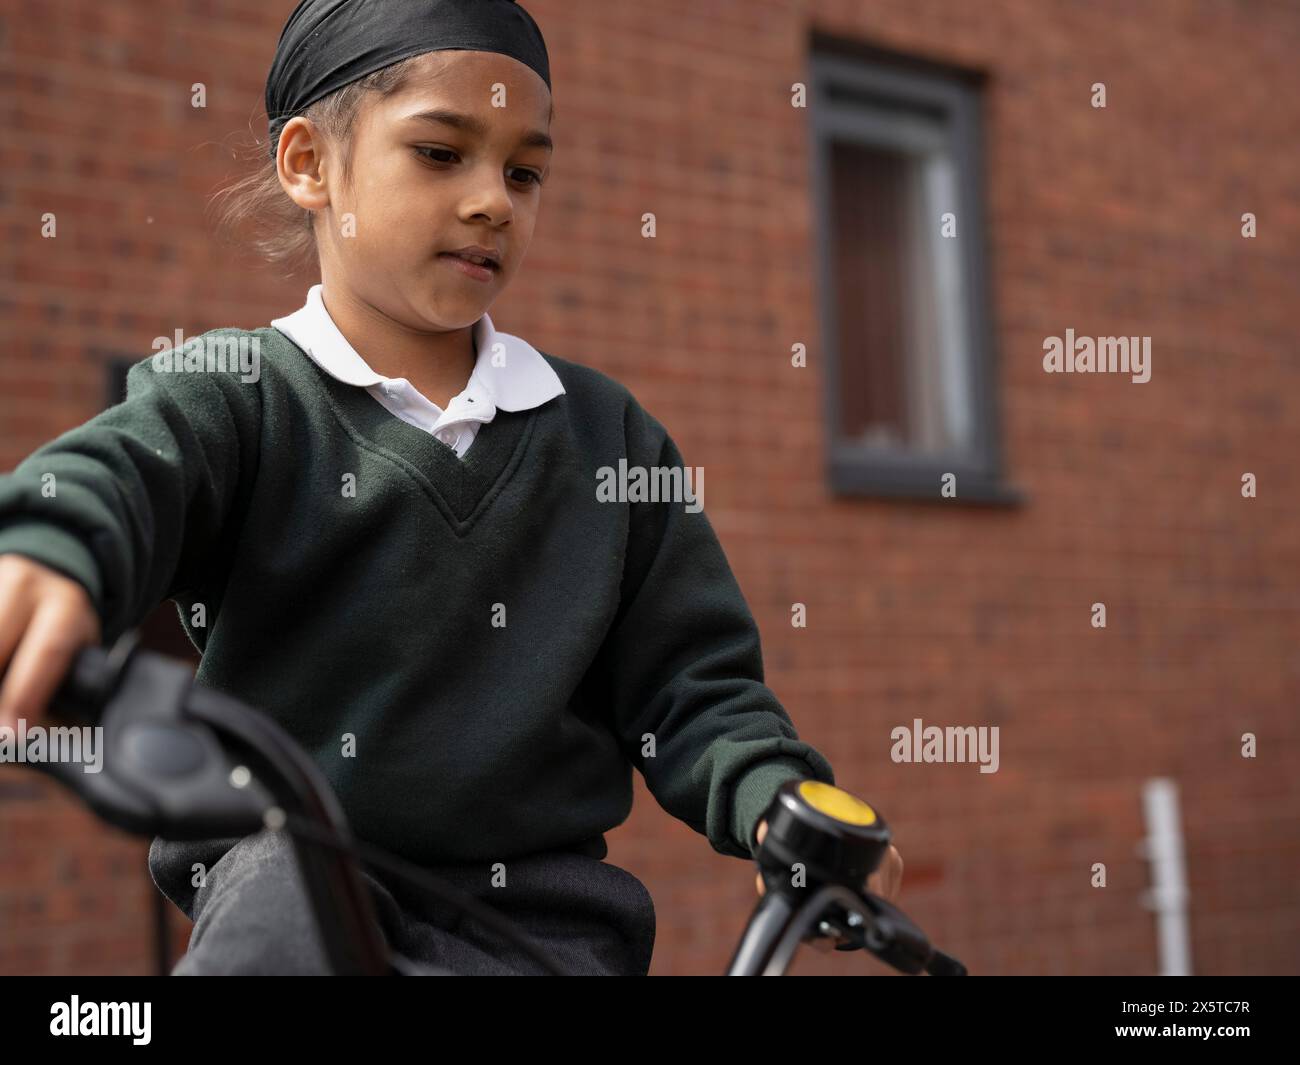 Boy (6-7) in school uniform riding bicycle Stock Photo